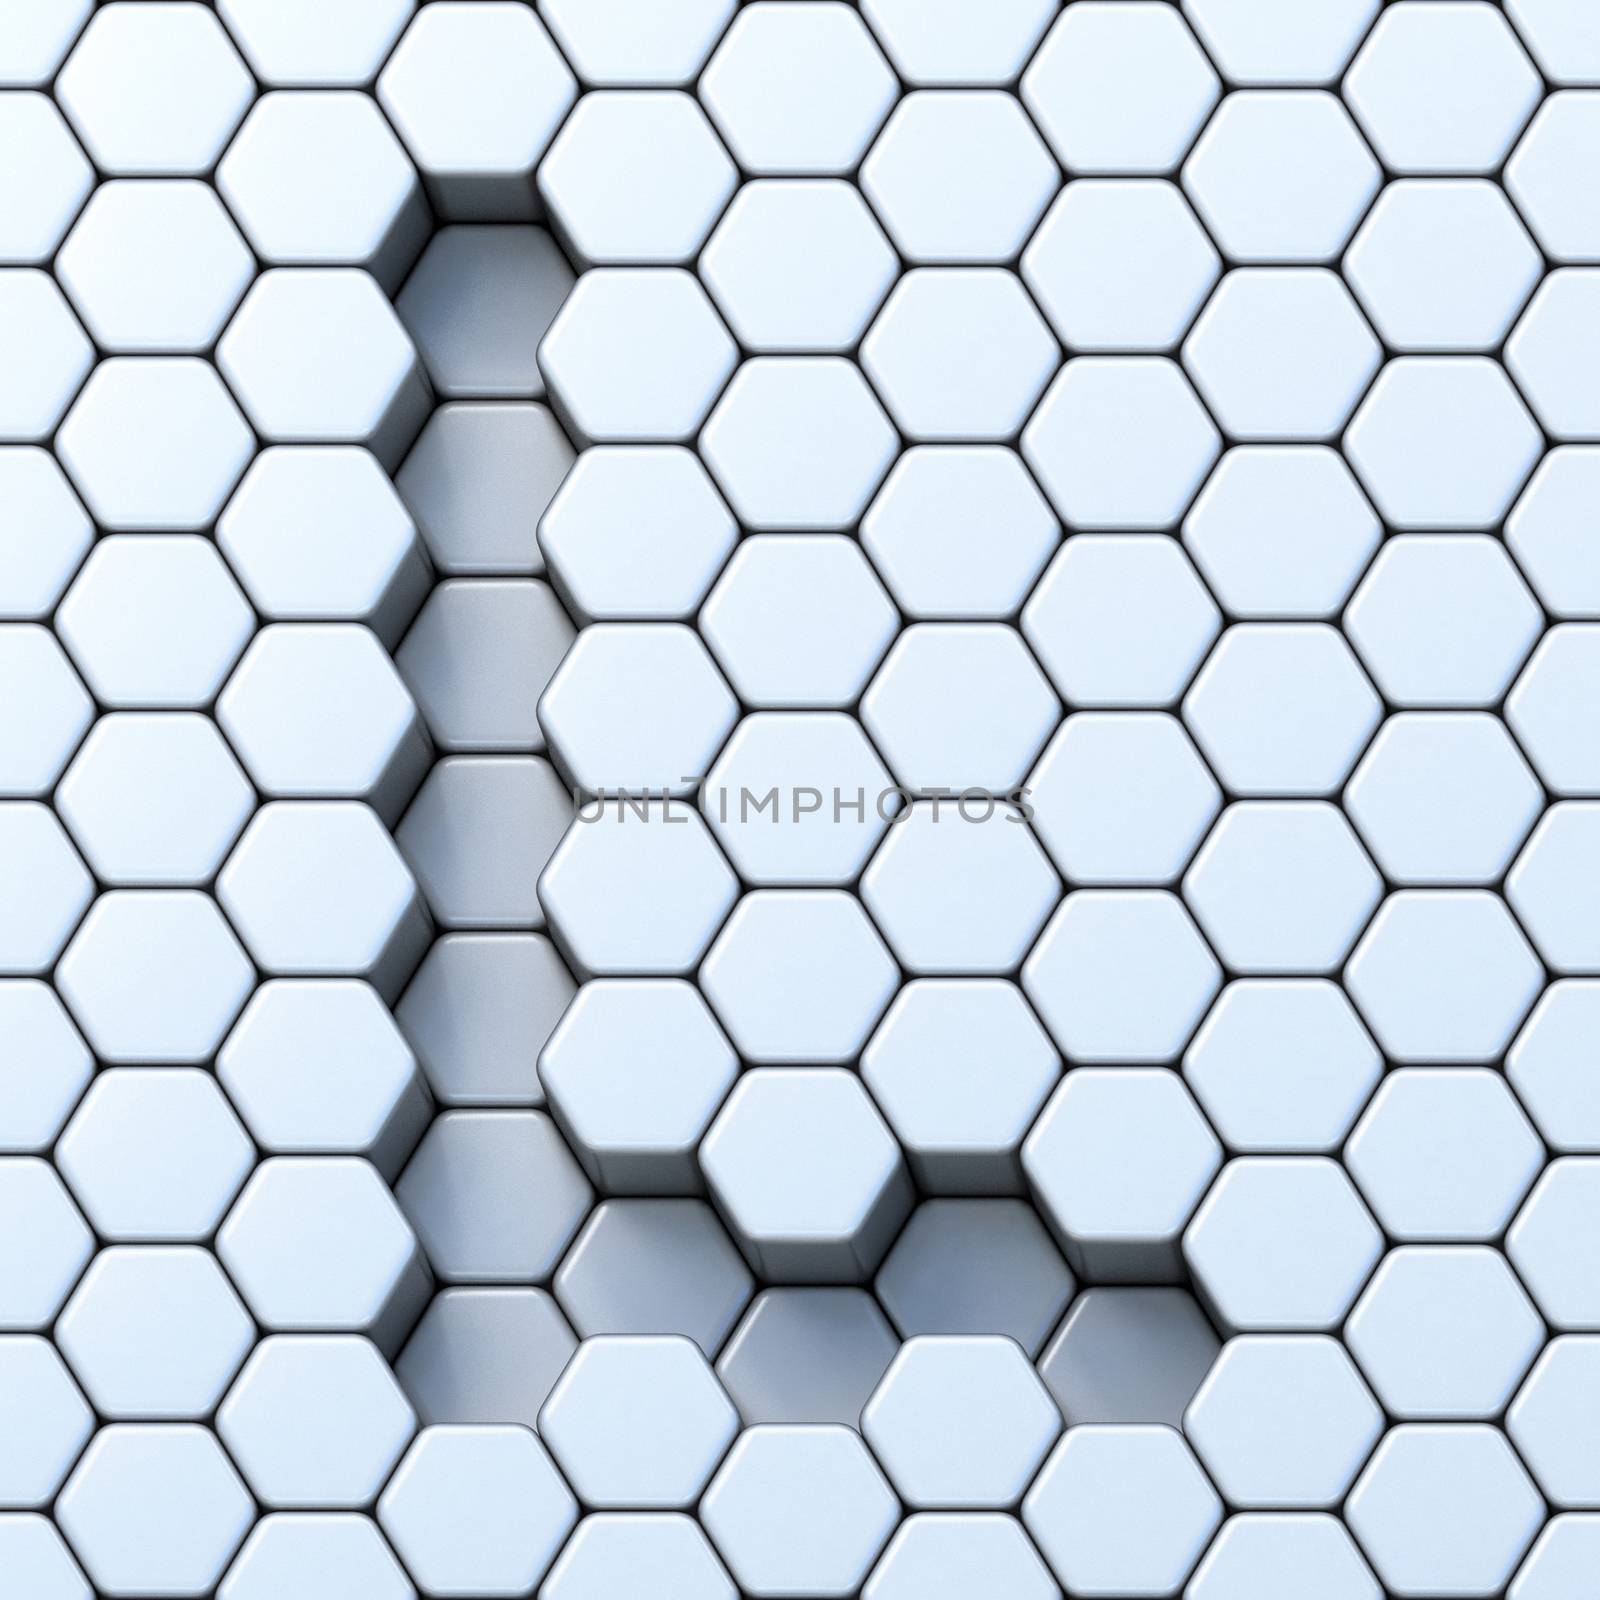 Hexagonal grid letter L 3D render illustration